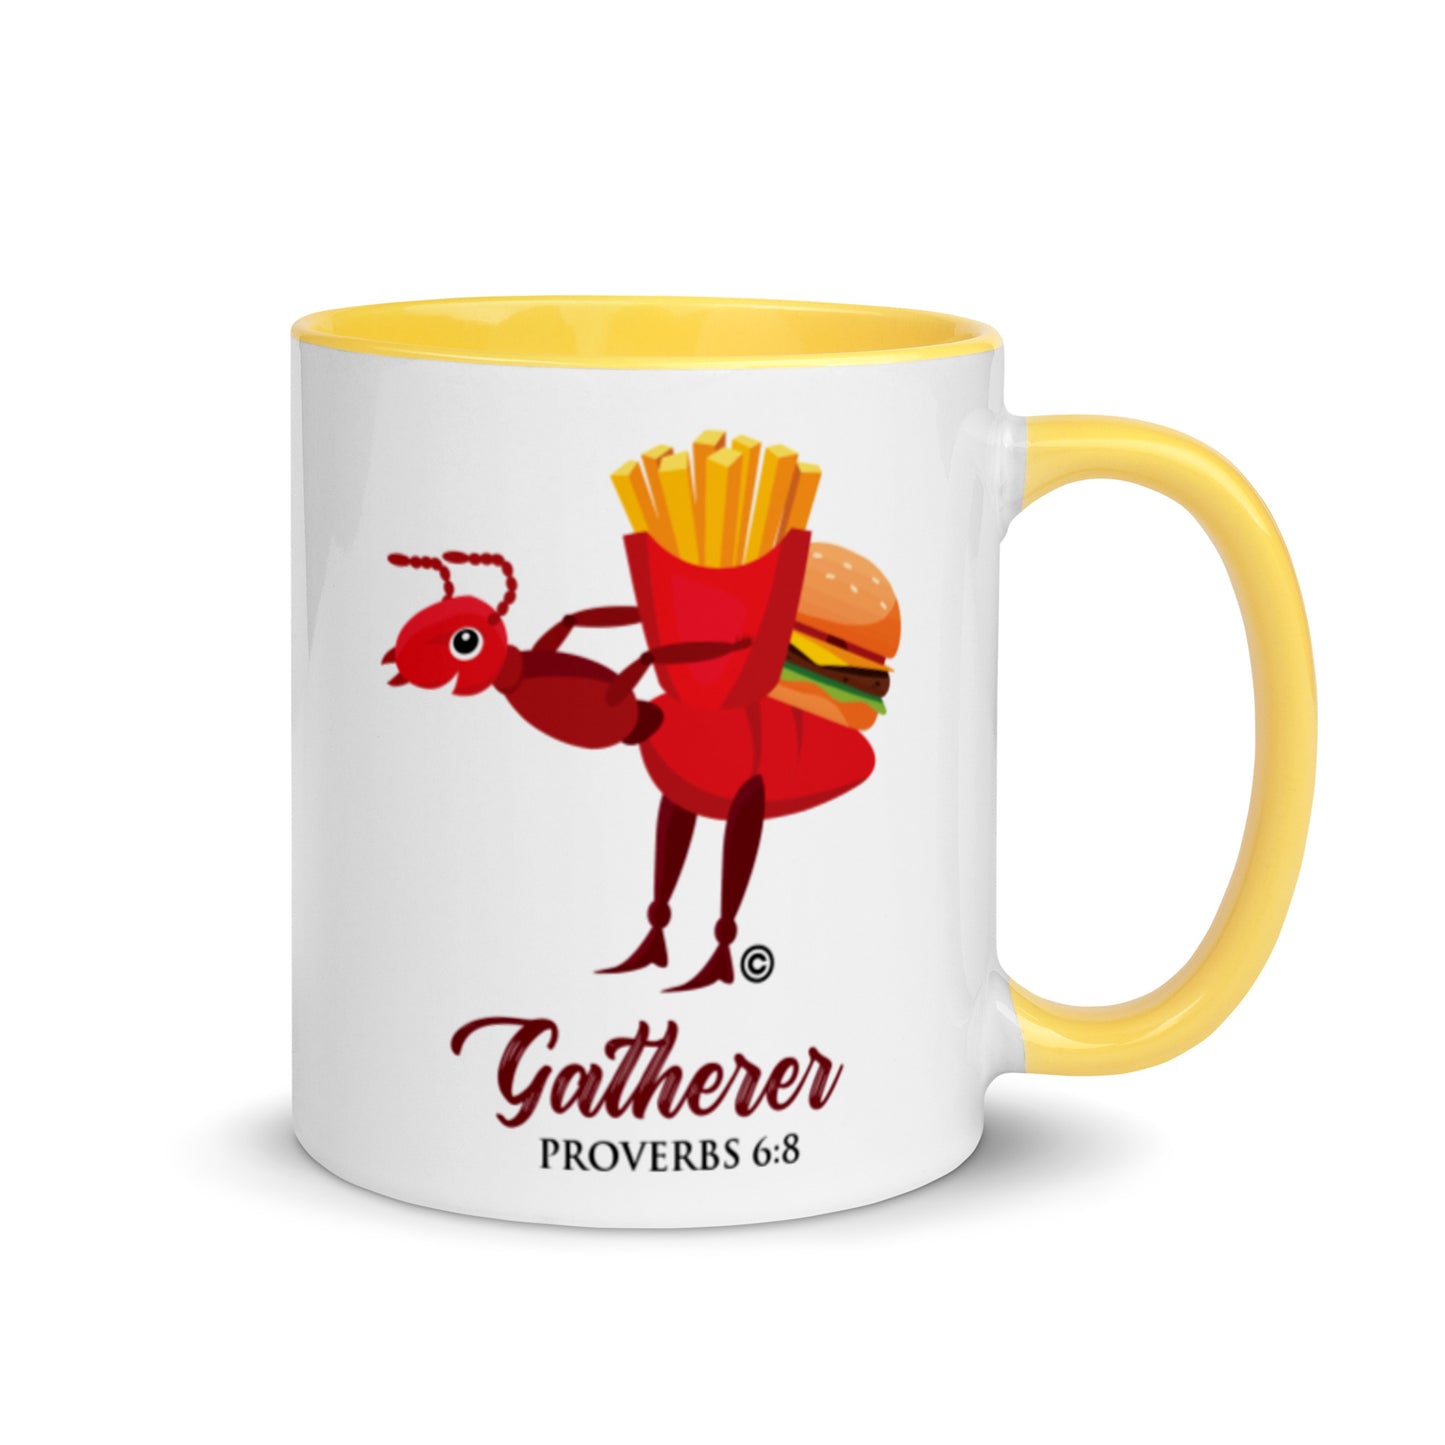 Gatherer Mug with Color Inside